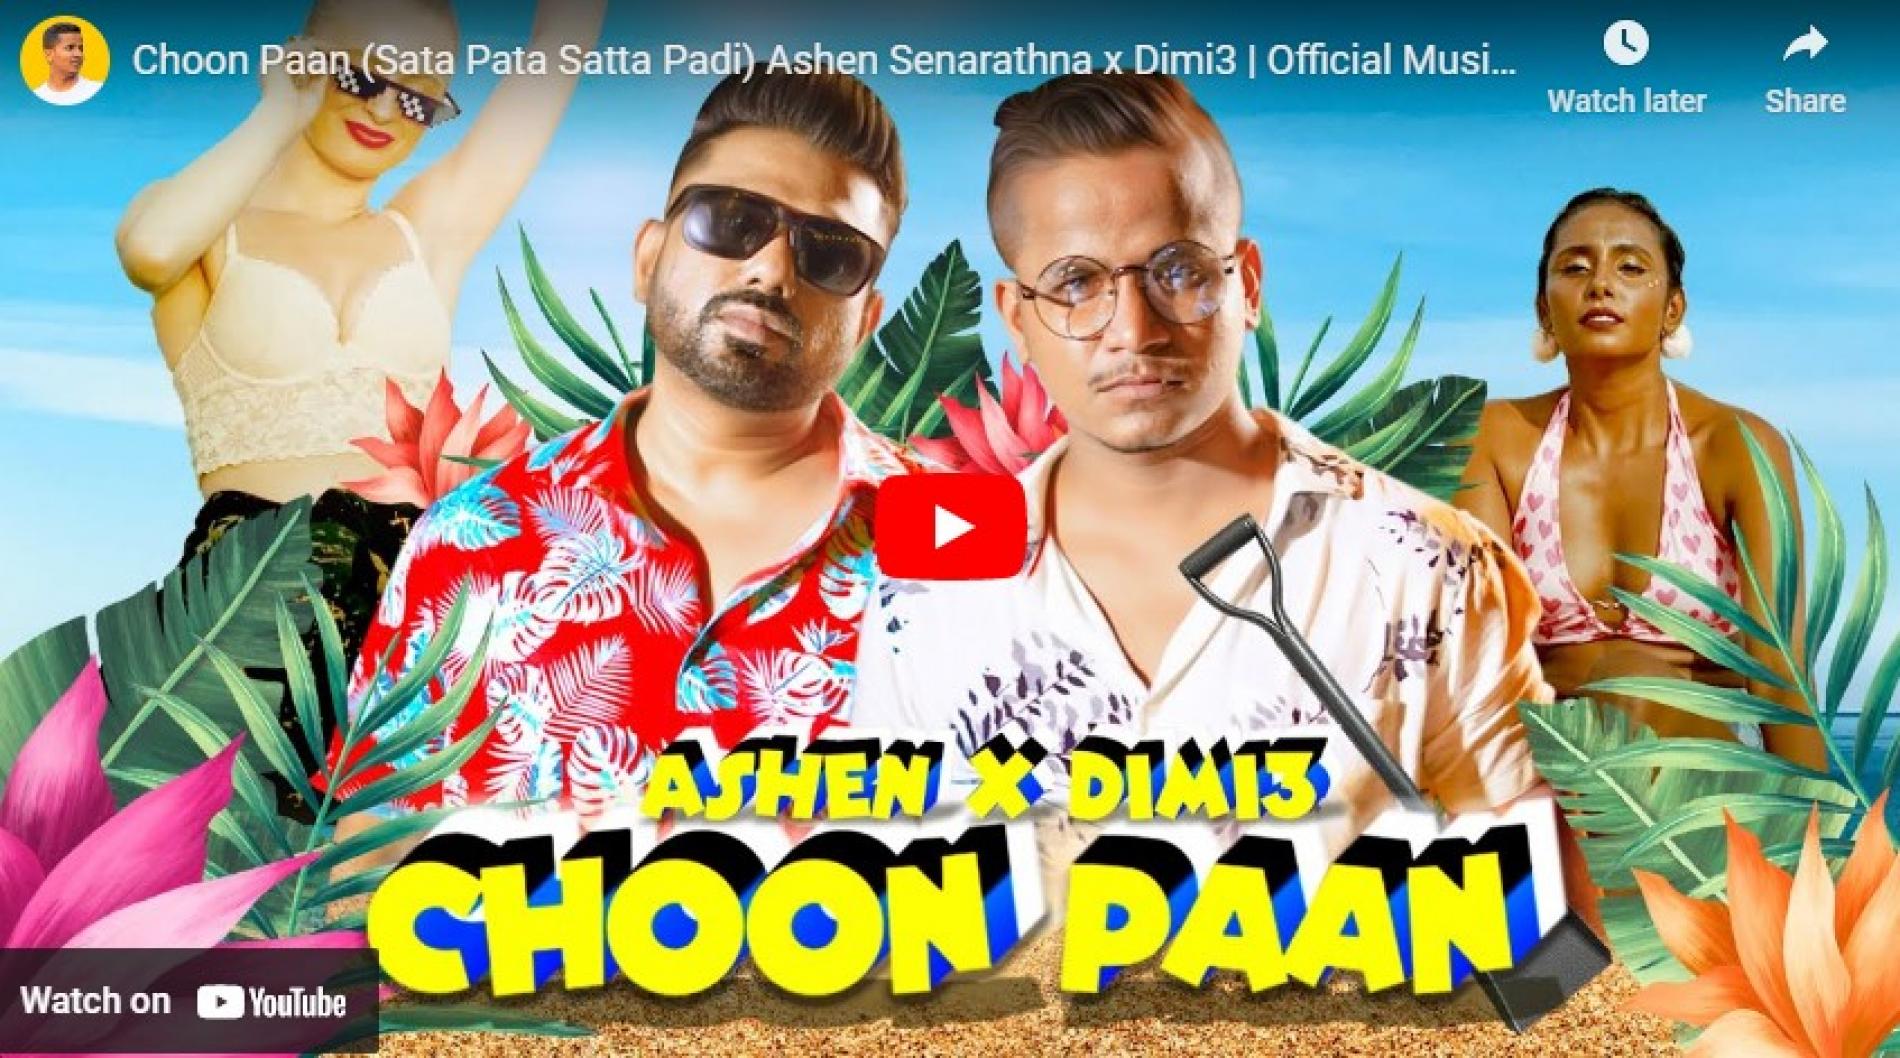 New Music : Choon Paan (Sata Pata Satta Padi) Ashen Senarathna x Dimi3 | Official Music Video